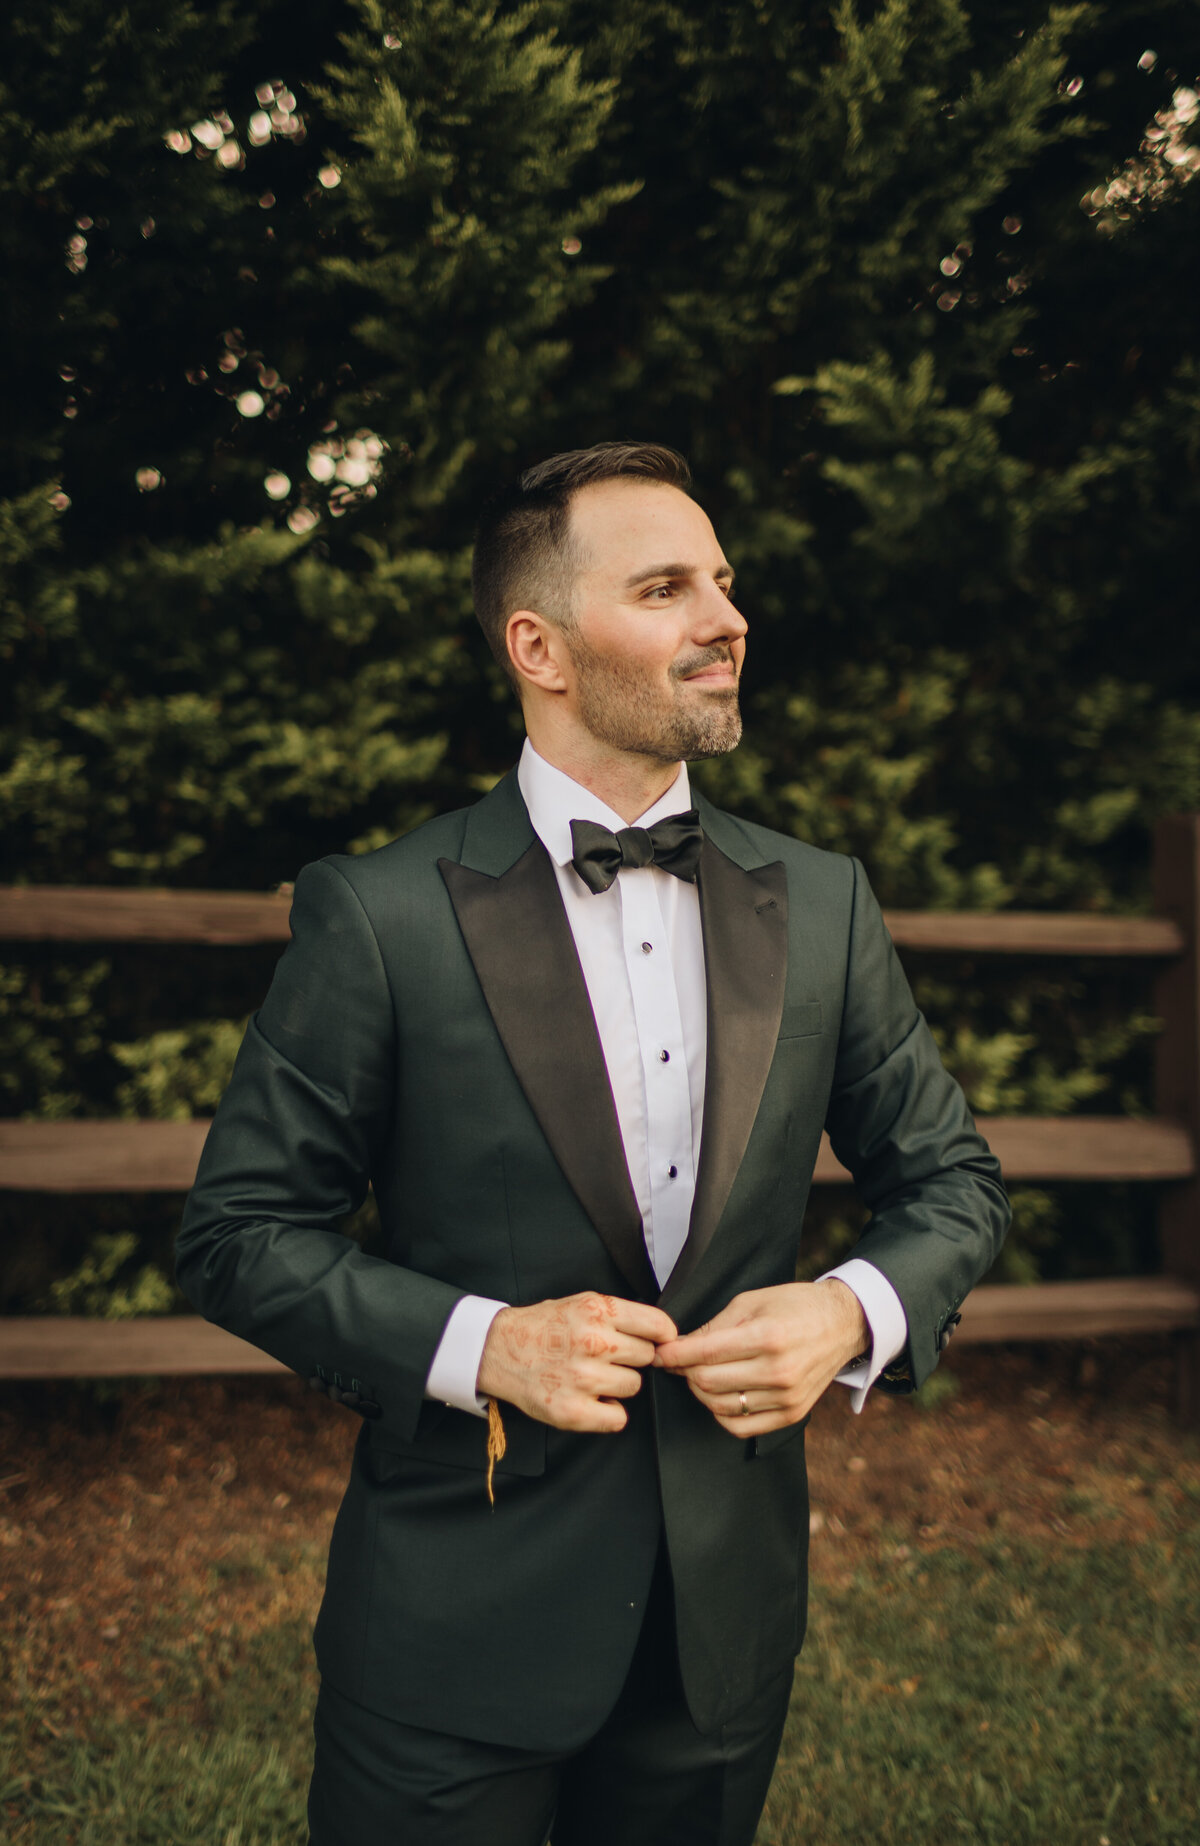 TONY + REKHA Ashville Wedding Day 2 - RECEPTION- before dinner portraits - Groom attire of green tux